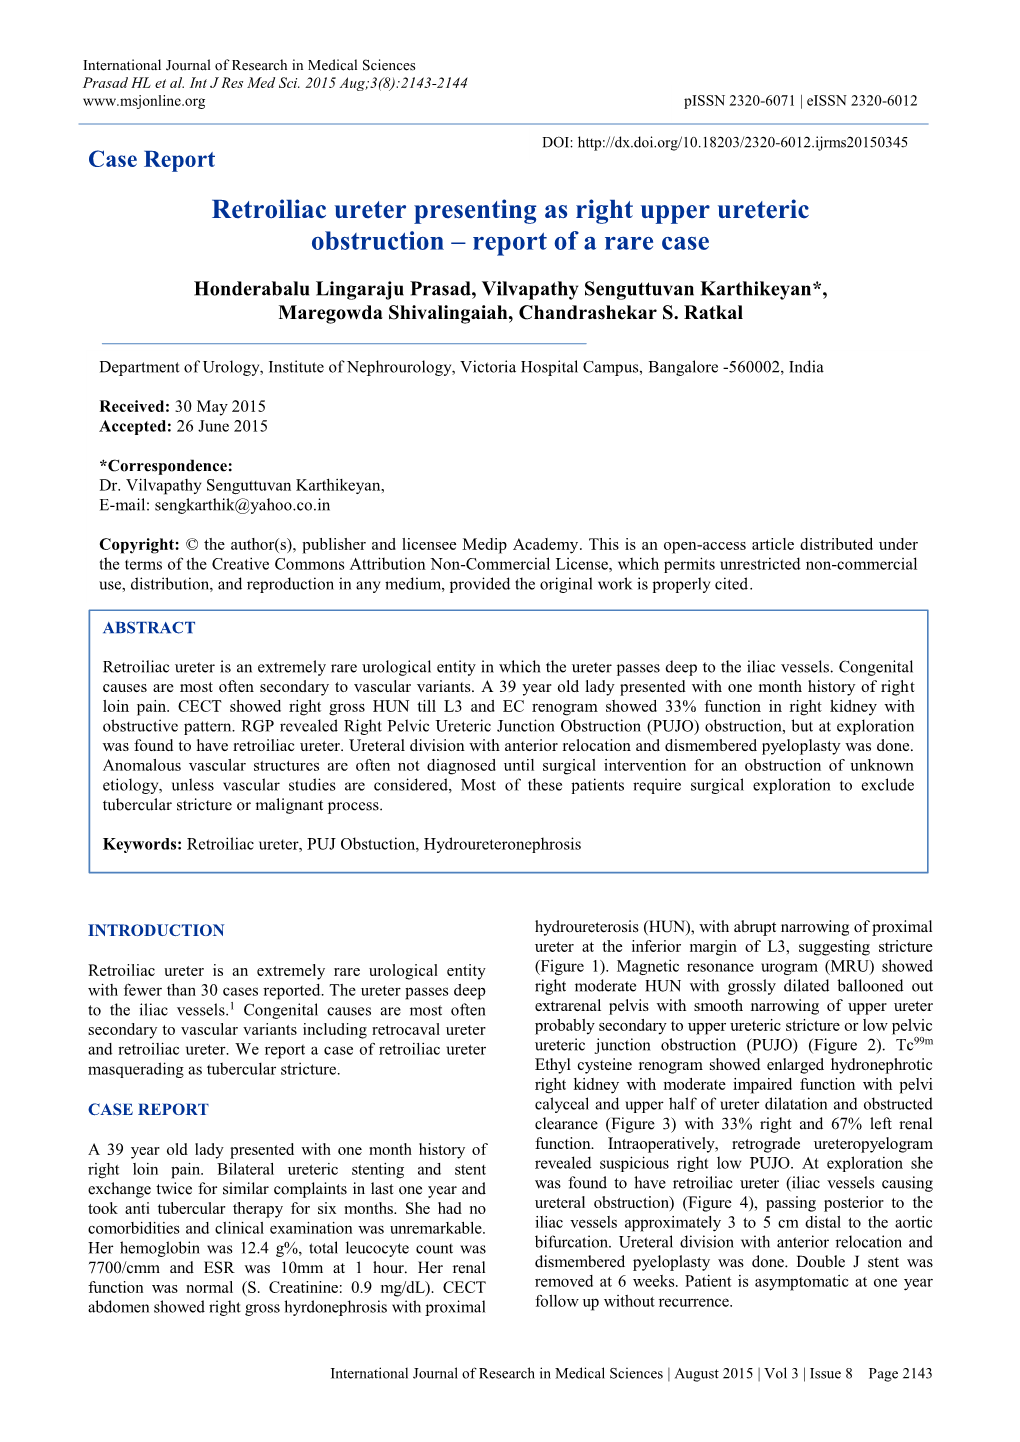 Retroiliac Ureter Presenting As Right Upper Ureteric Obstruction – Report of a Rare Case